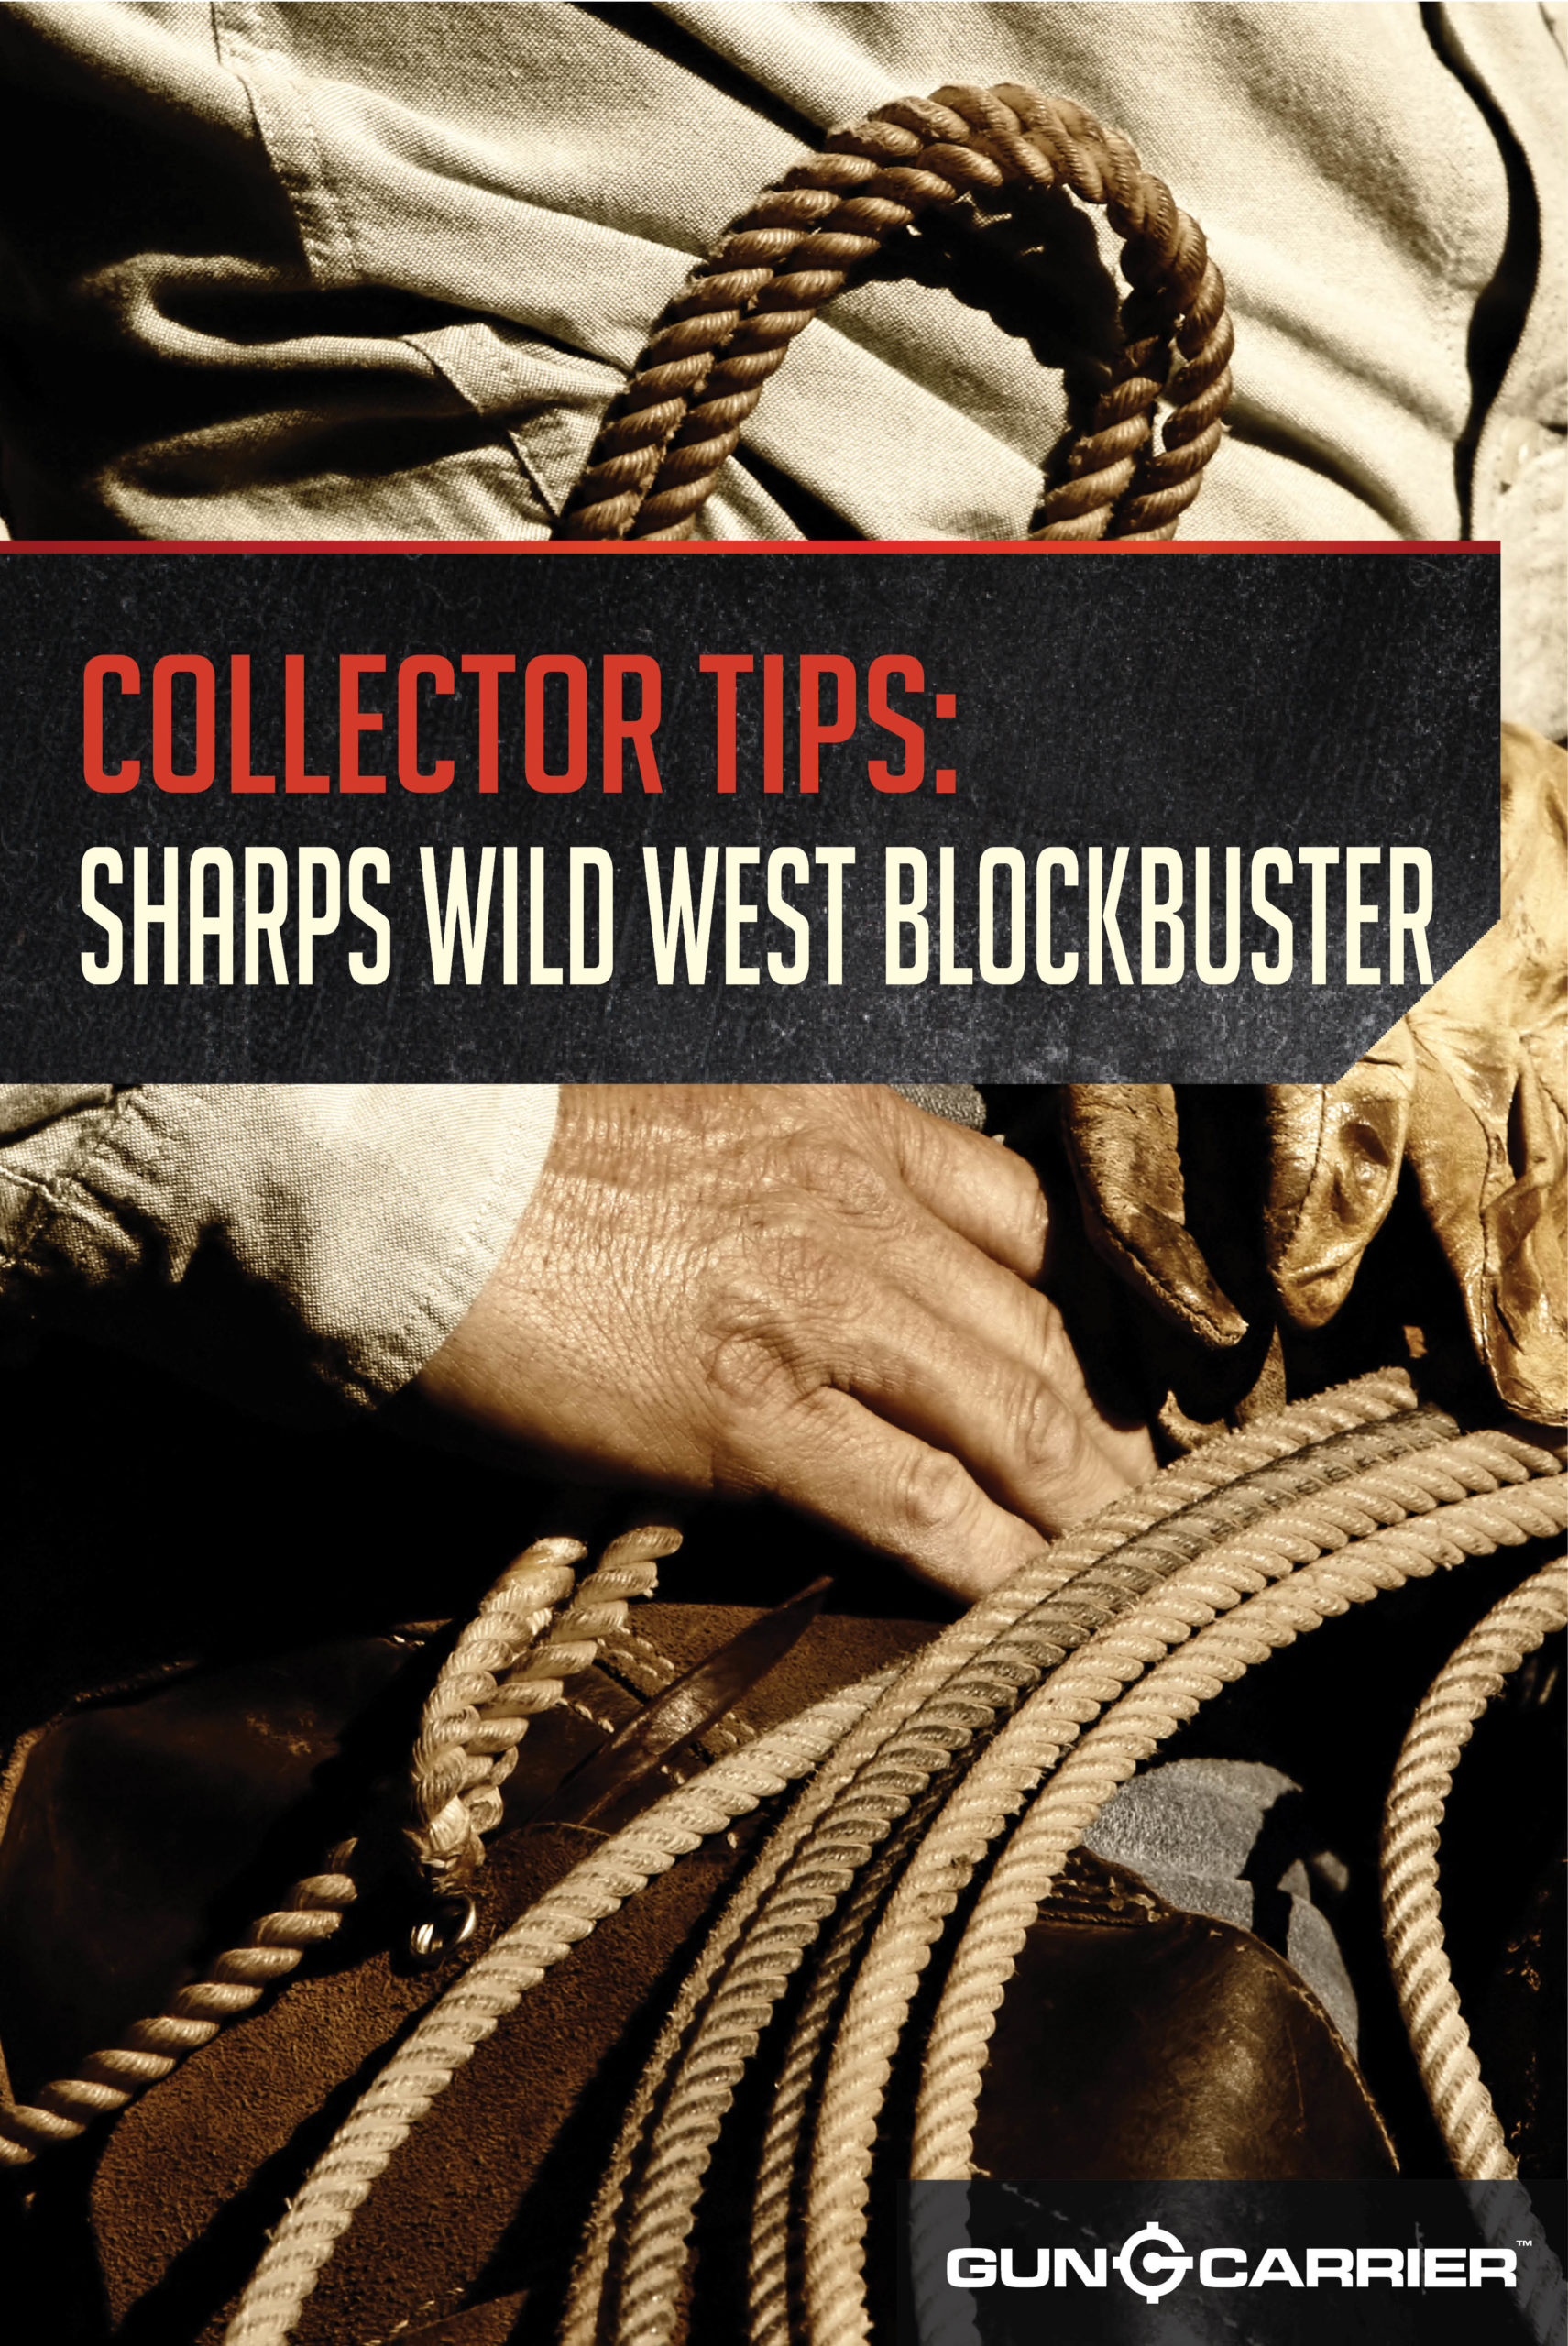 The Sharps Wild West Blockbuster by Gun Carrier at https://guncarriernews.wpengine.com/sharps-wild-west-blockbuster